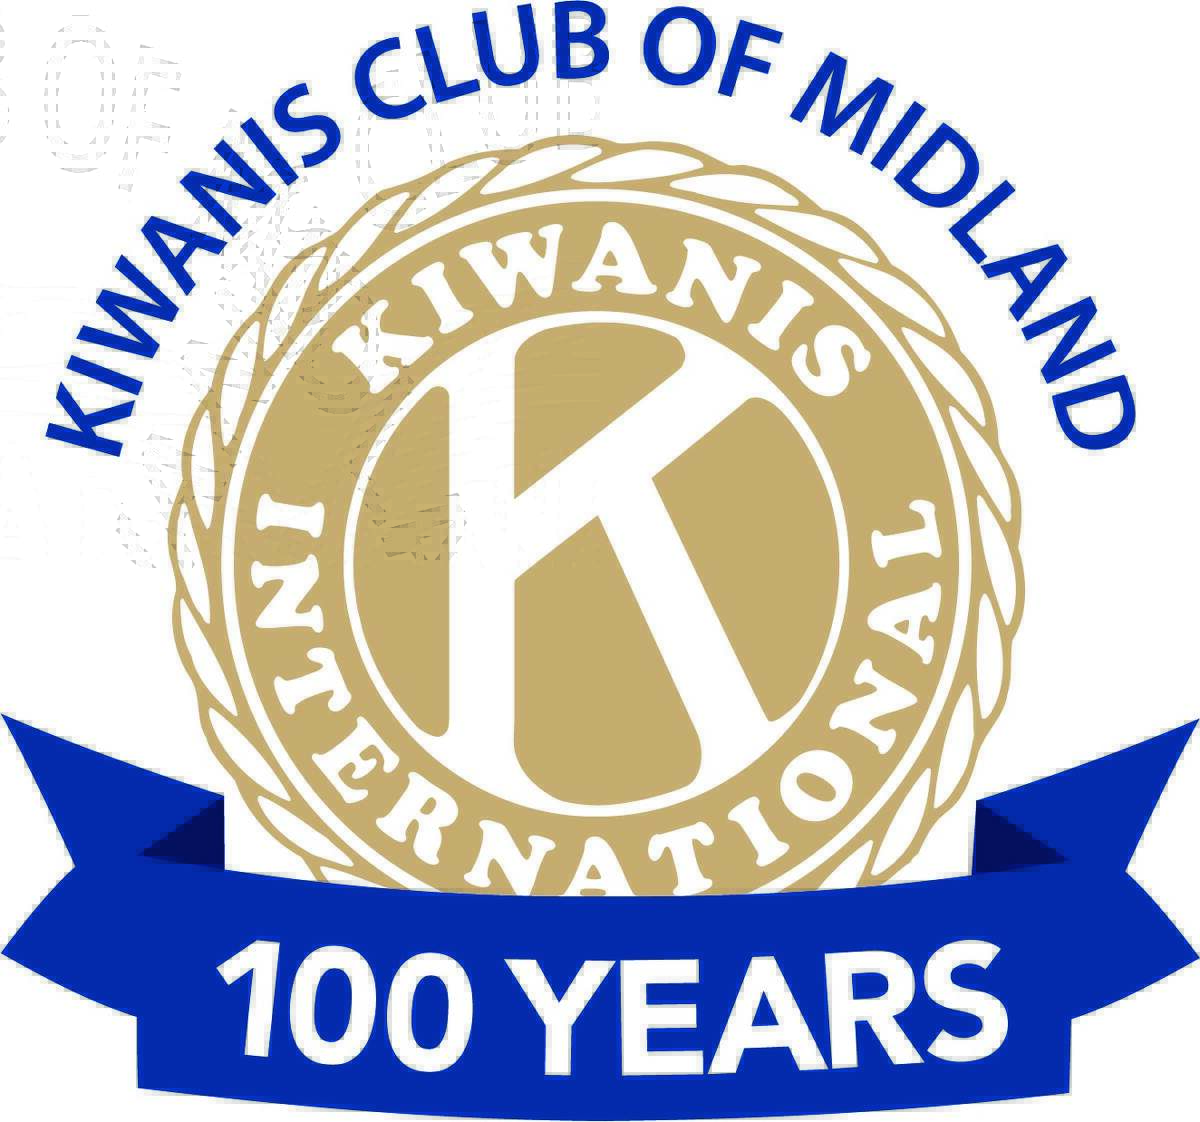 Midland Kiwanis is celebrating its 100th anniversary.